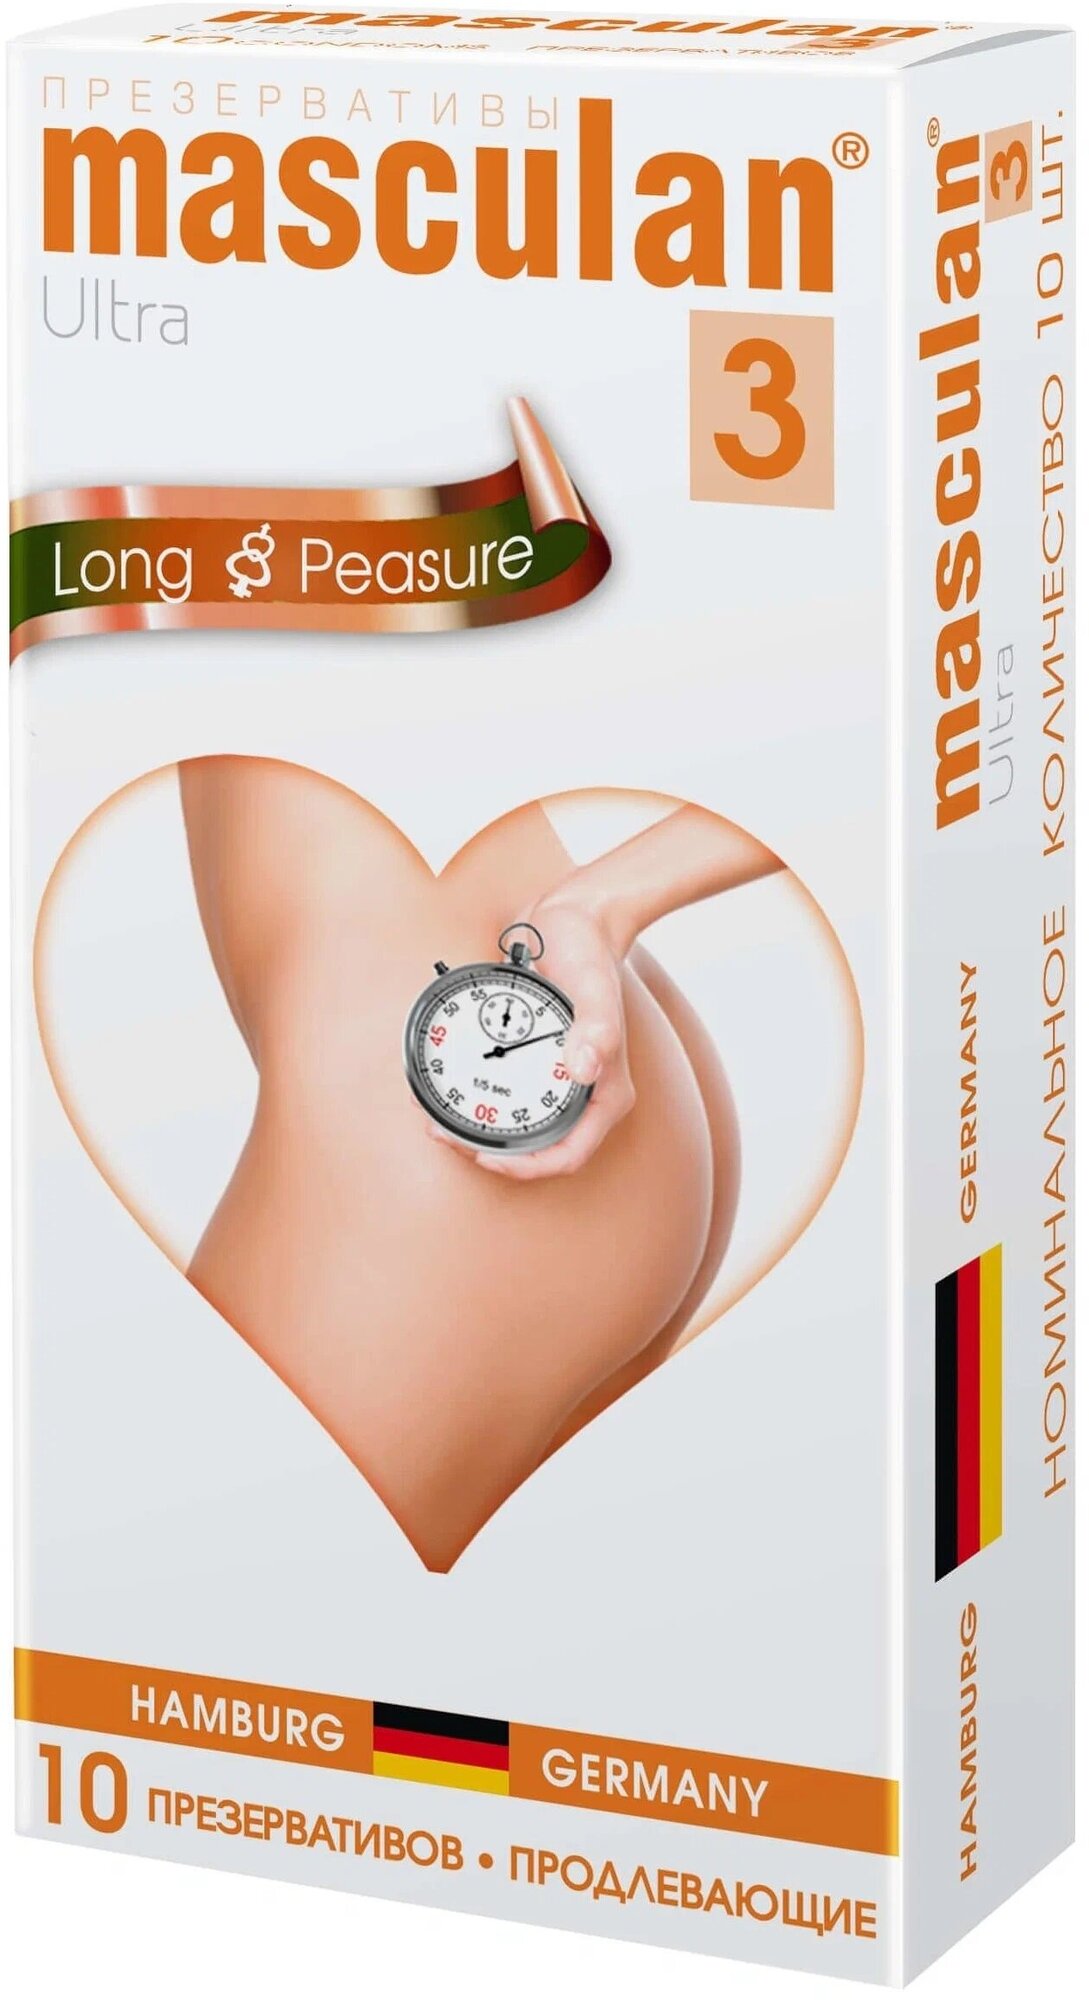 Презервативы masculan 3 Ultra Long Pleasure, 10 шт.